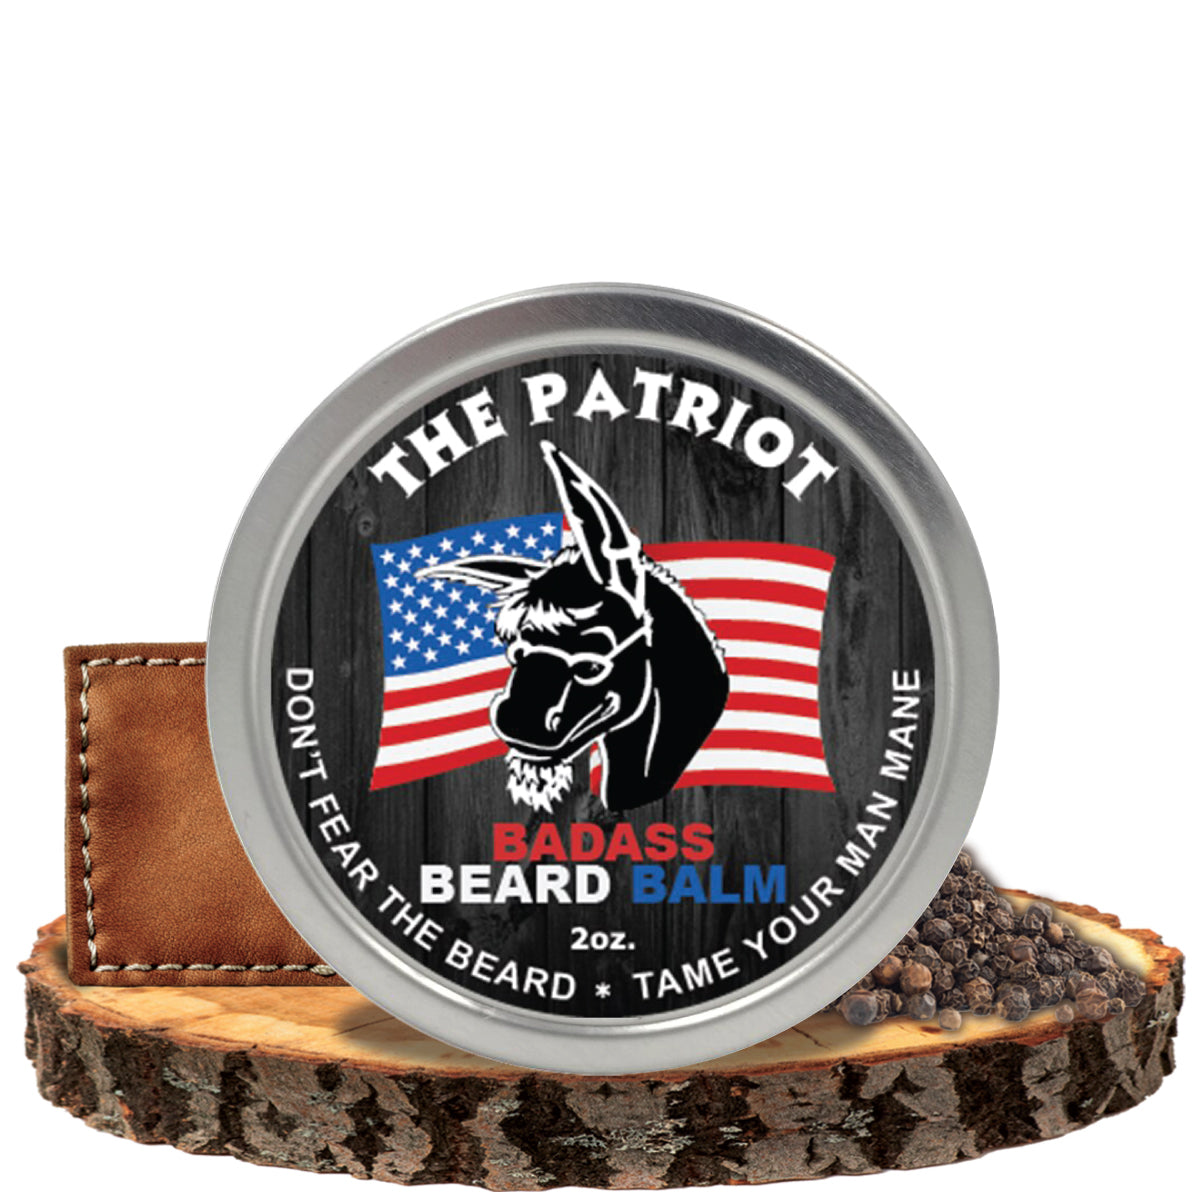 The Patriot Beard Balm